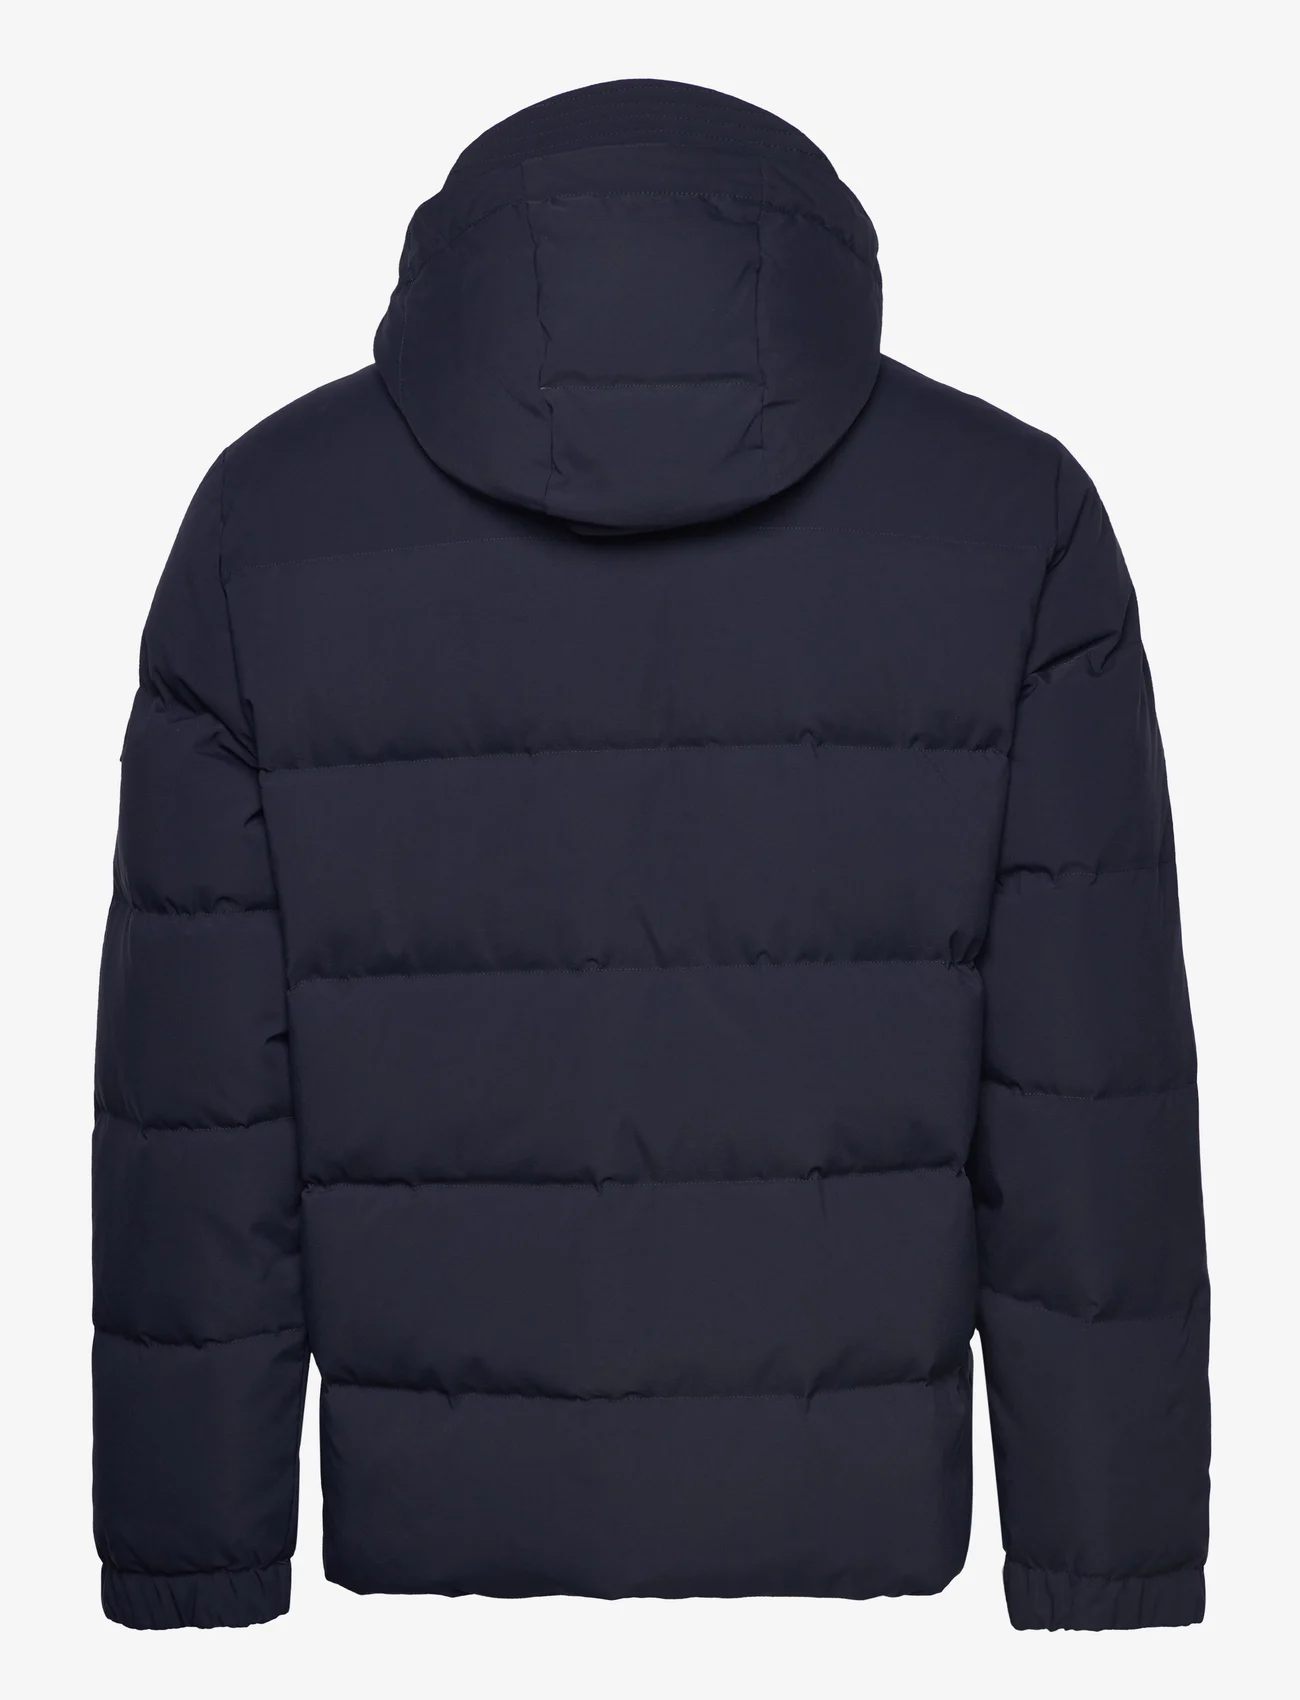 Lexington Clothing - Ben Down Puffer Jacket - talvitakit - dark blue - 1